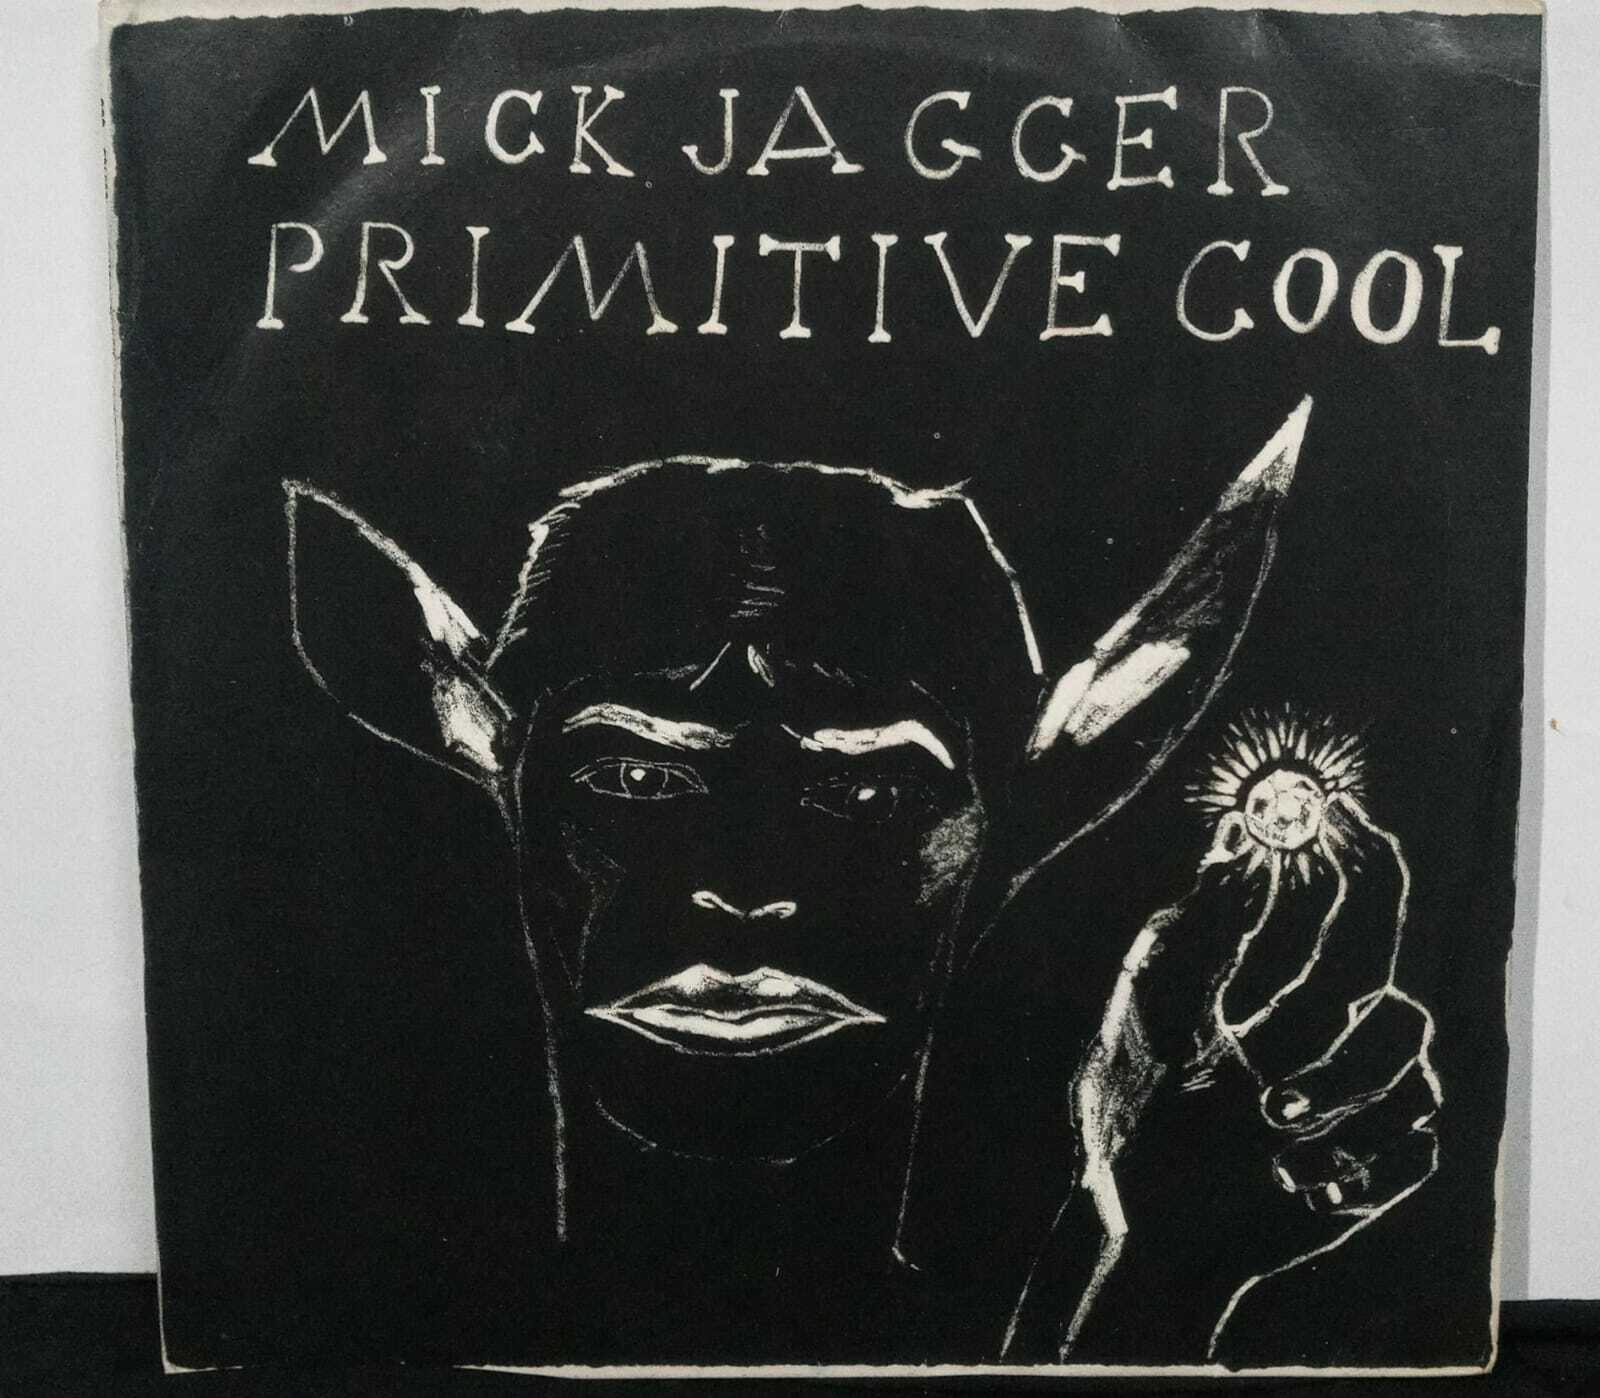 Vinil - Mick Jagger - Primitive Cool